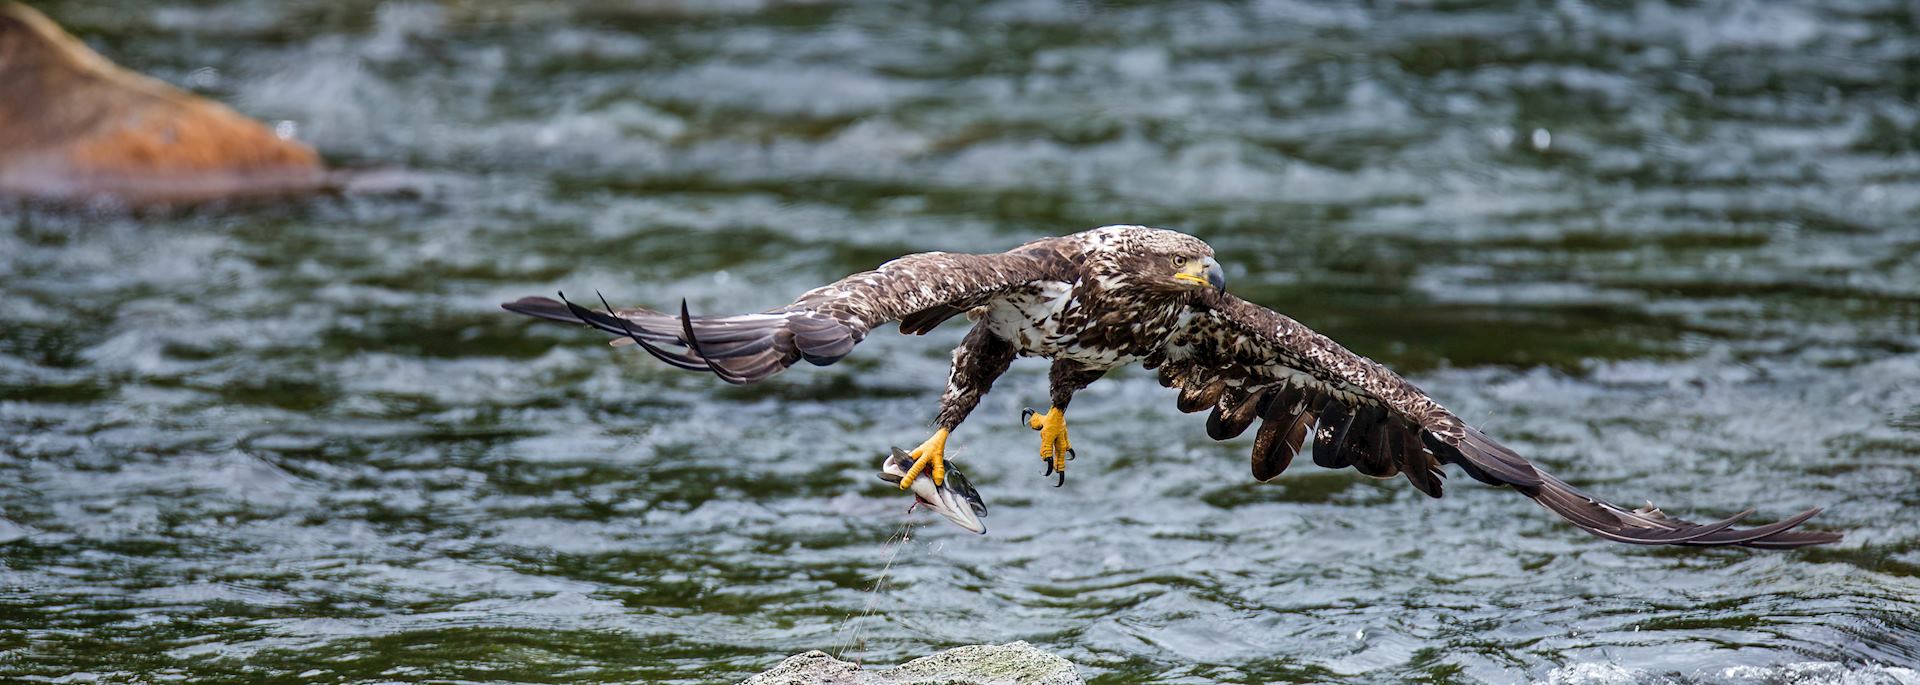 Eagle in Katmai National Park